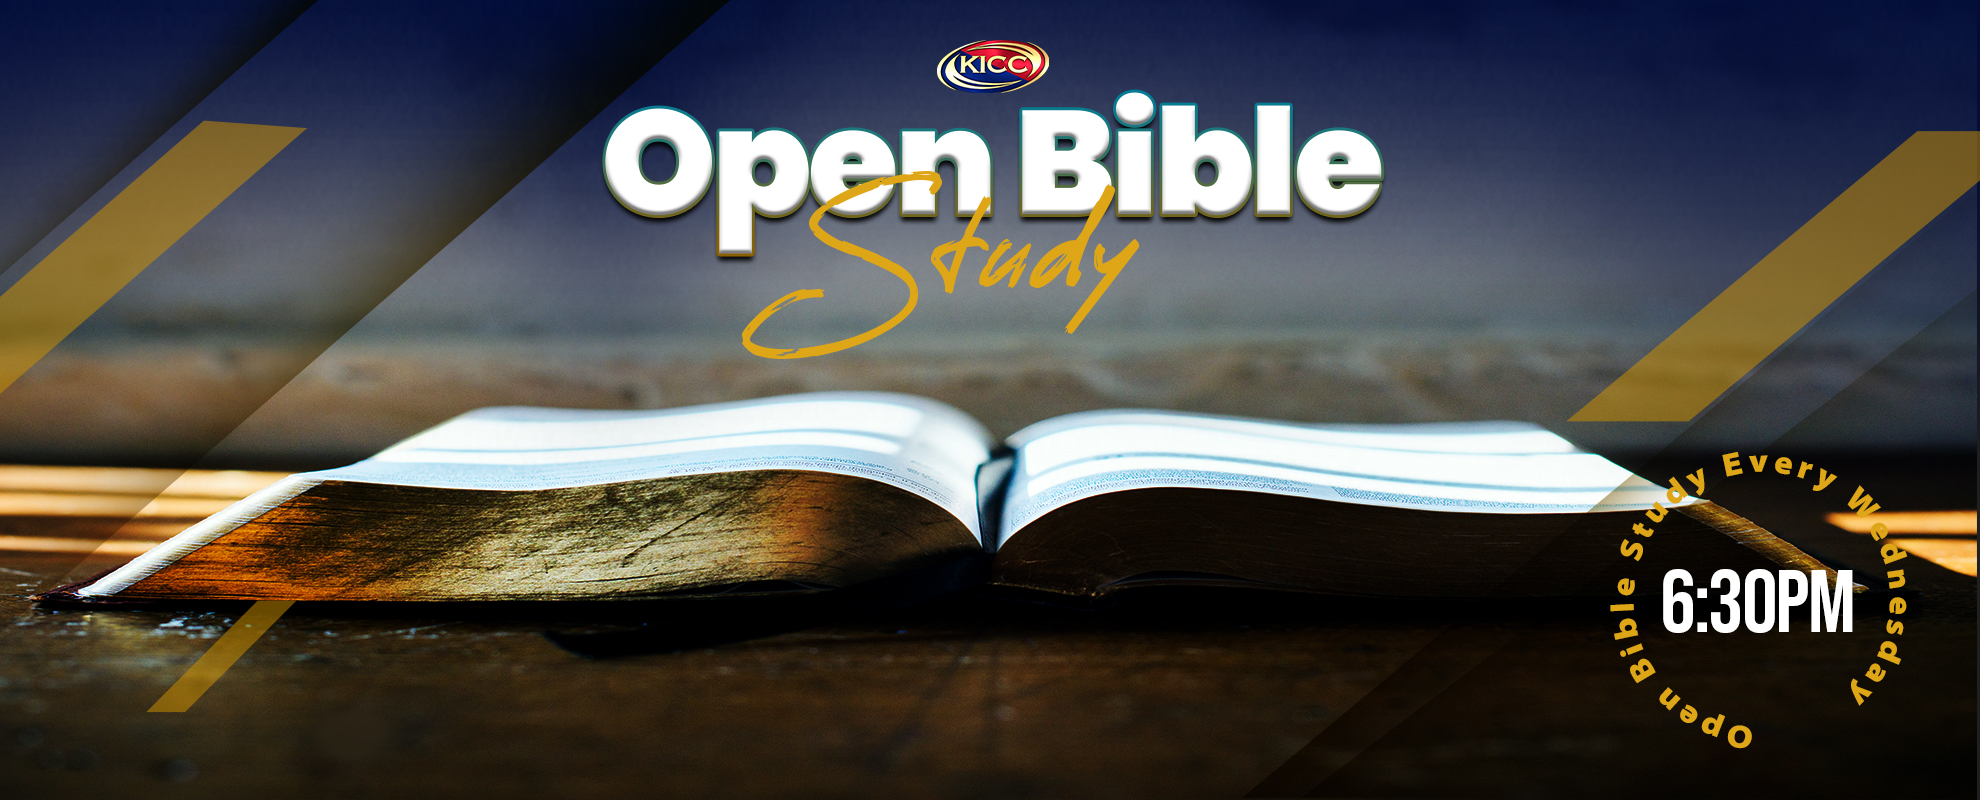 Open Bible Study - KICC Nigeria